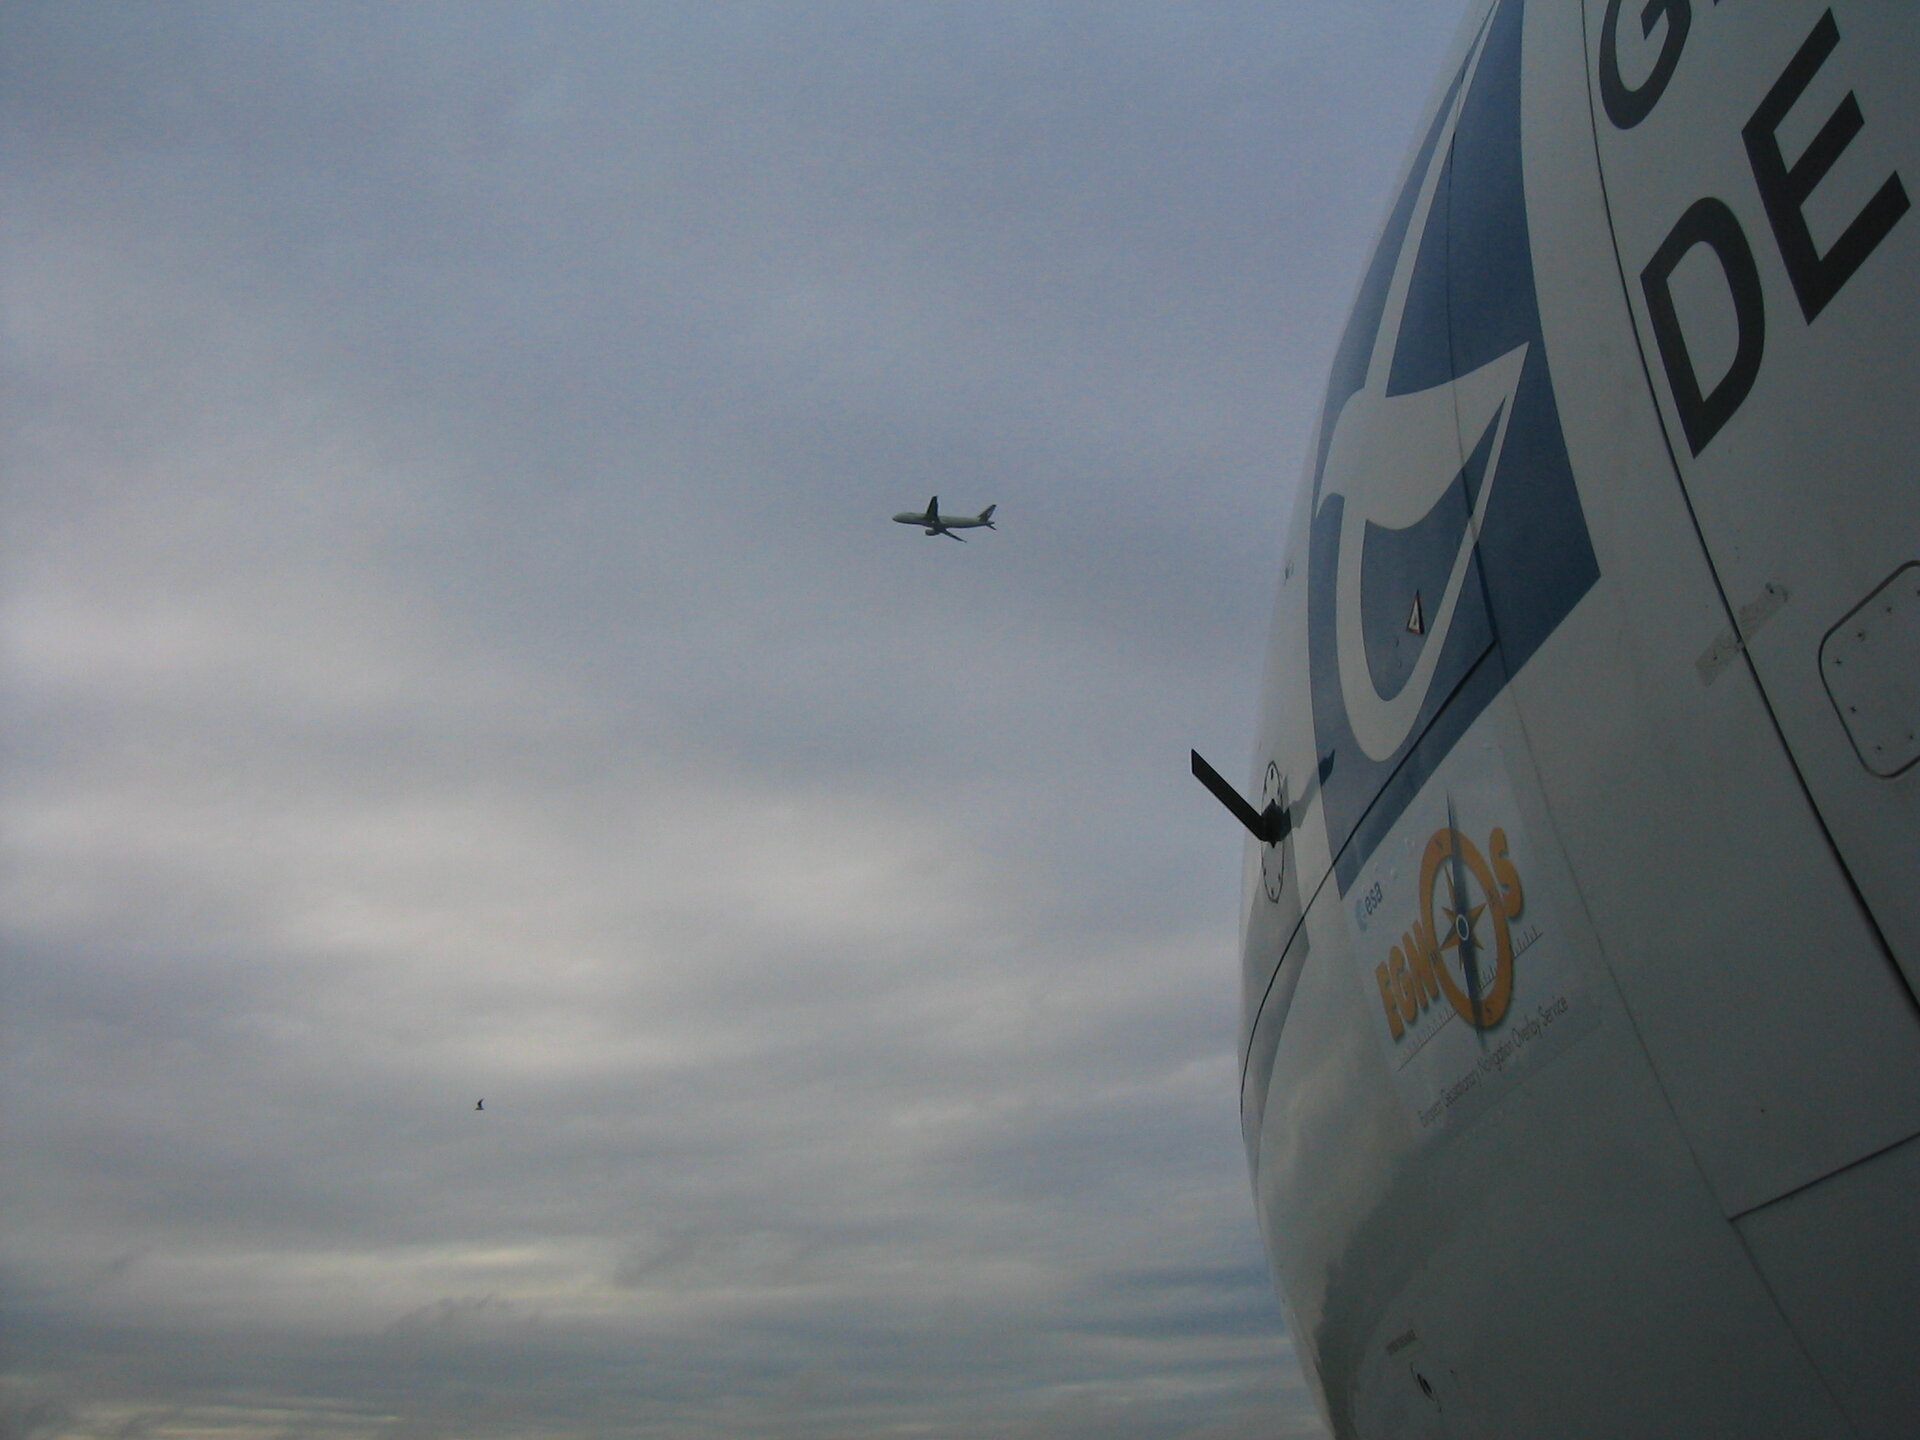 DGAC ATR42 test aircraft